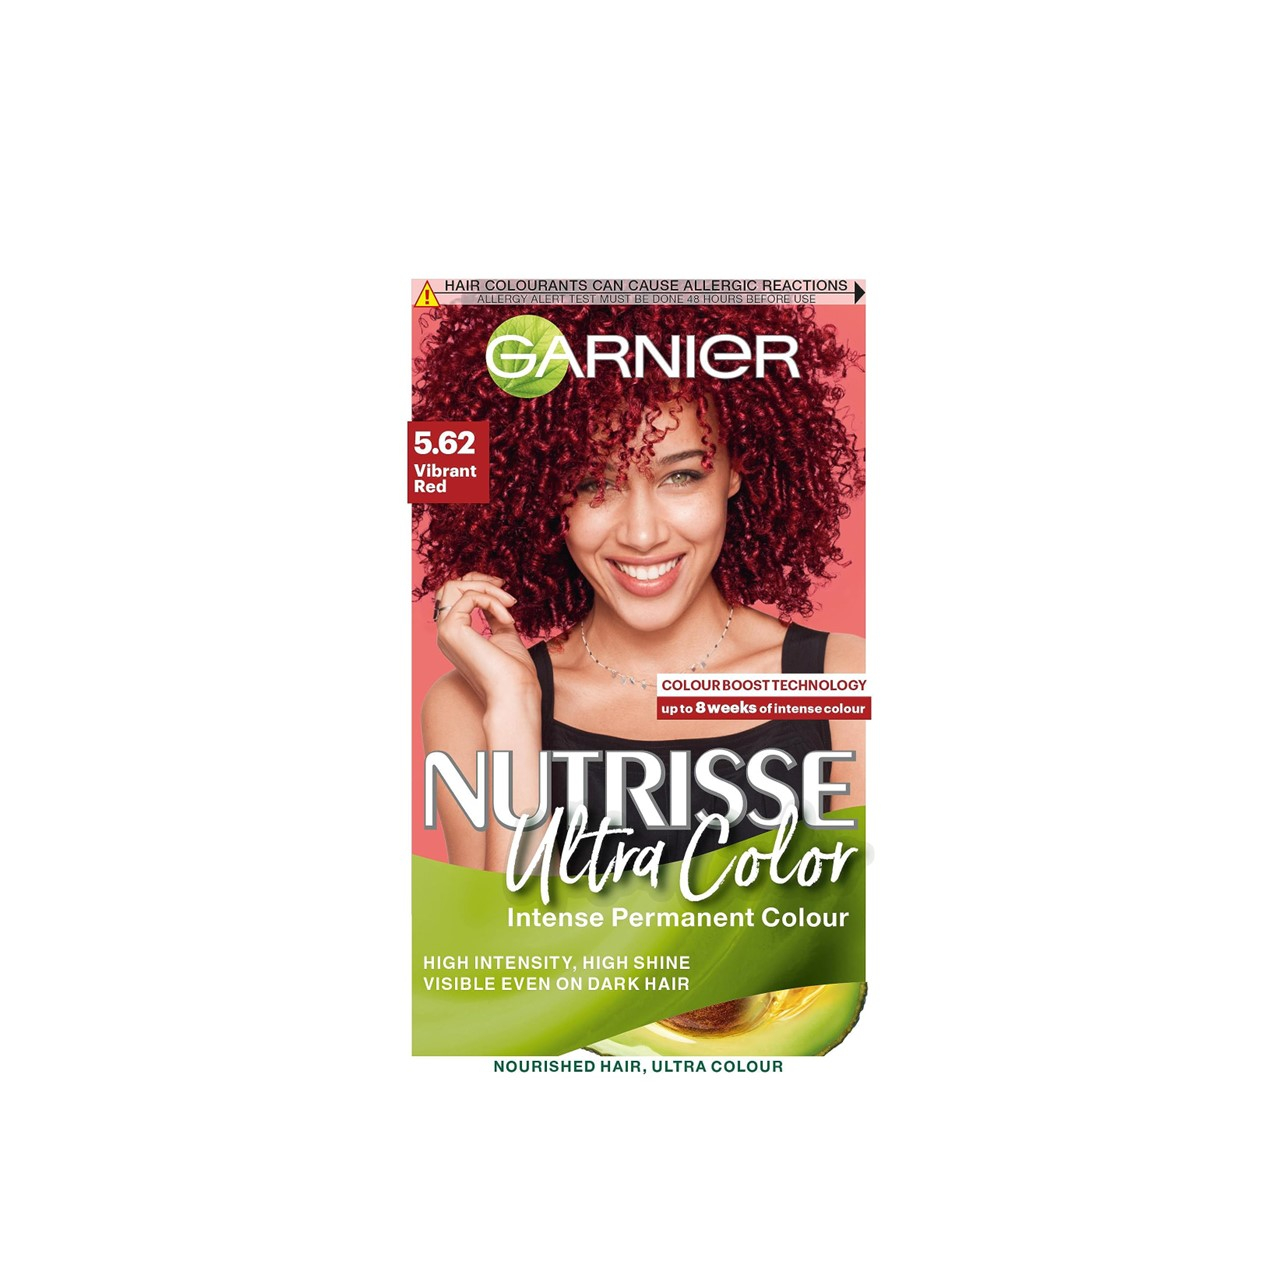 Garnier Nutrisse Ultra Color 5.62 Vibrant Red Permanent Hair Dye